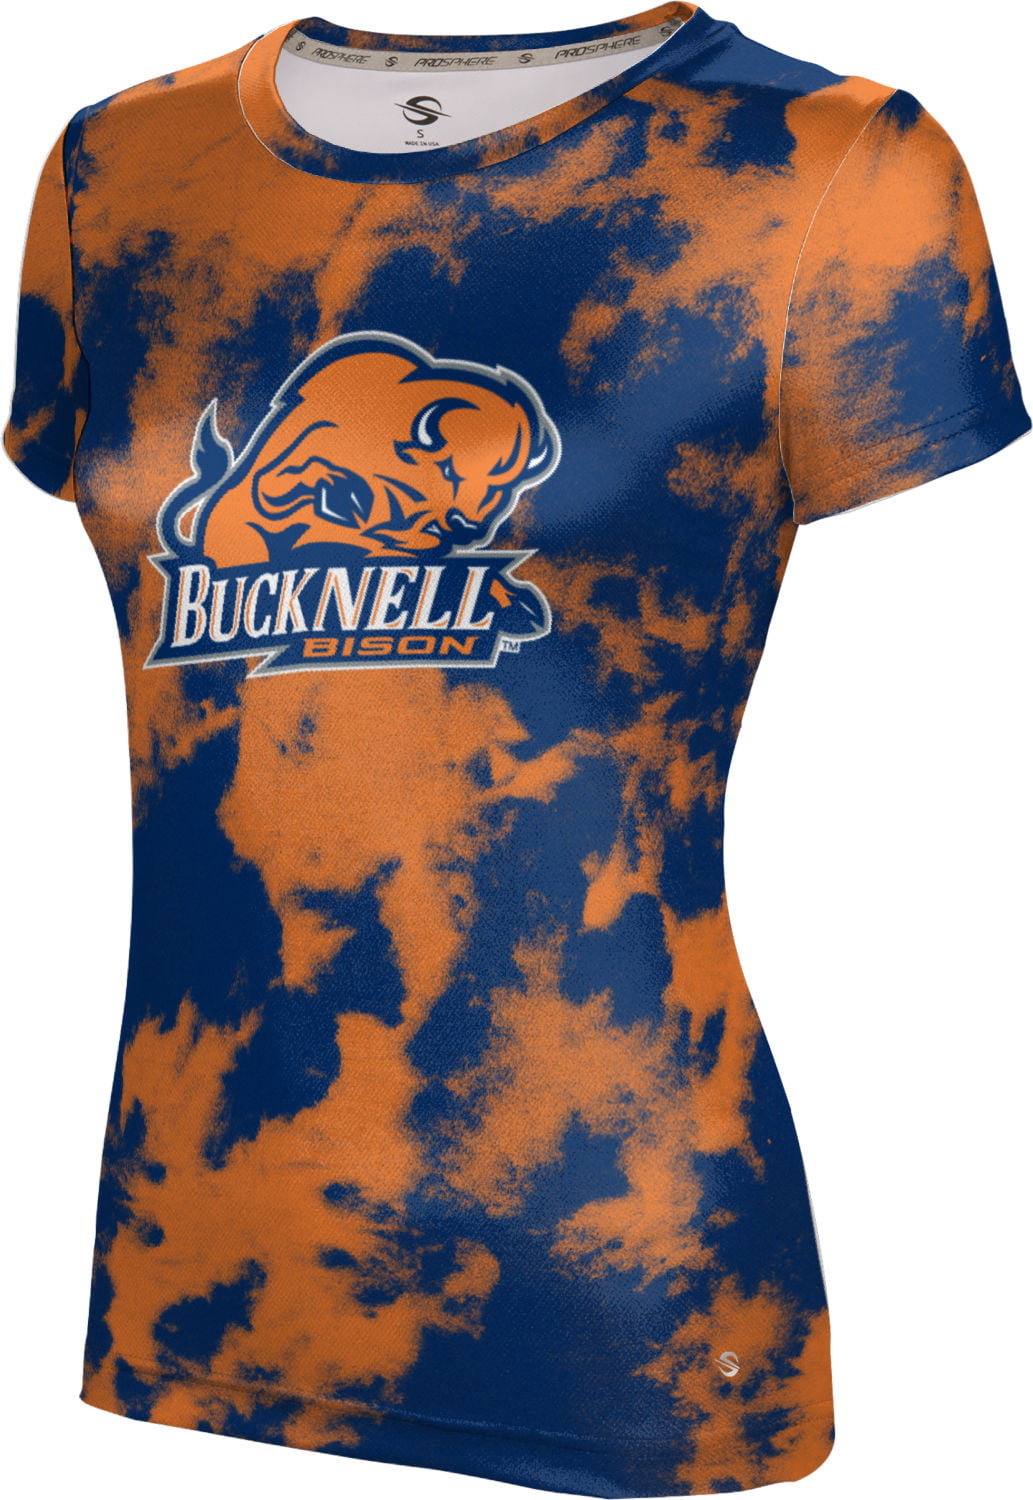 ProSphere Bucknell University Mens Performance T-Shirt Grunge 